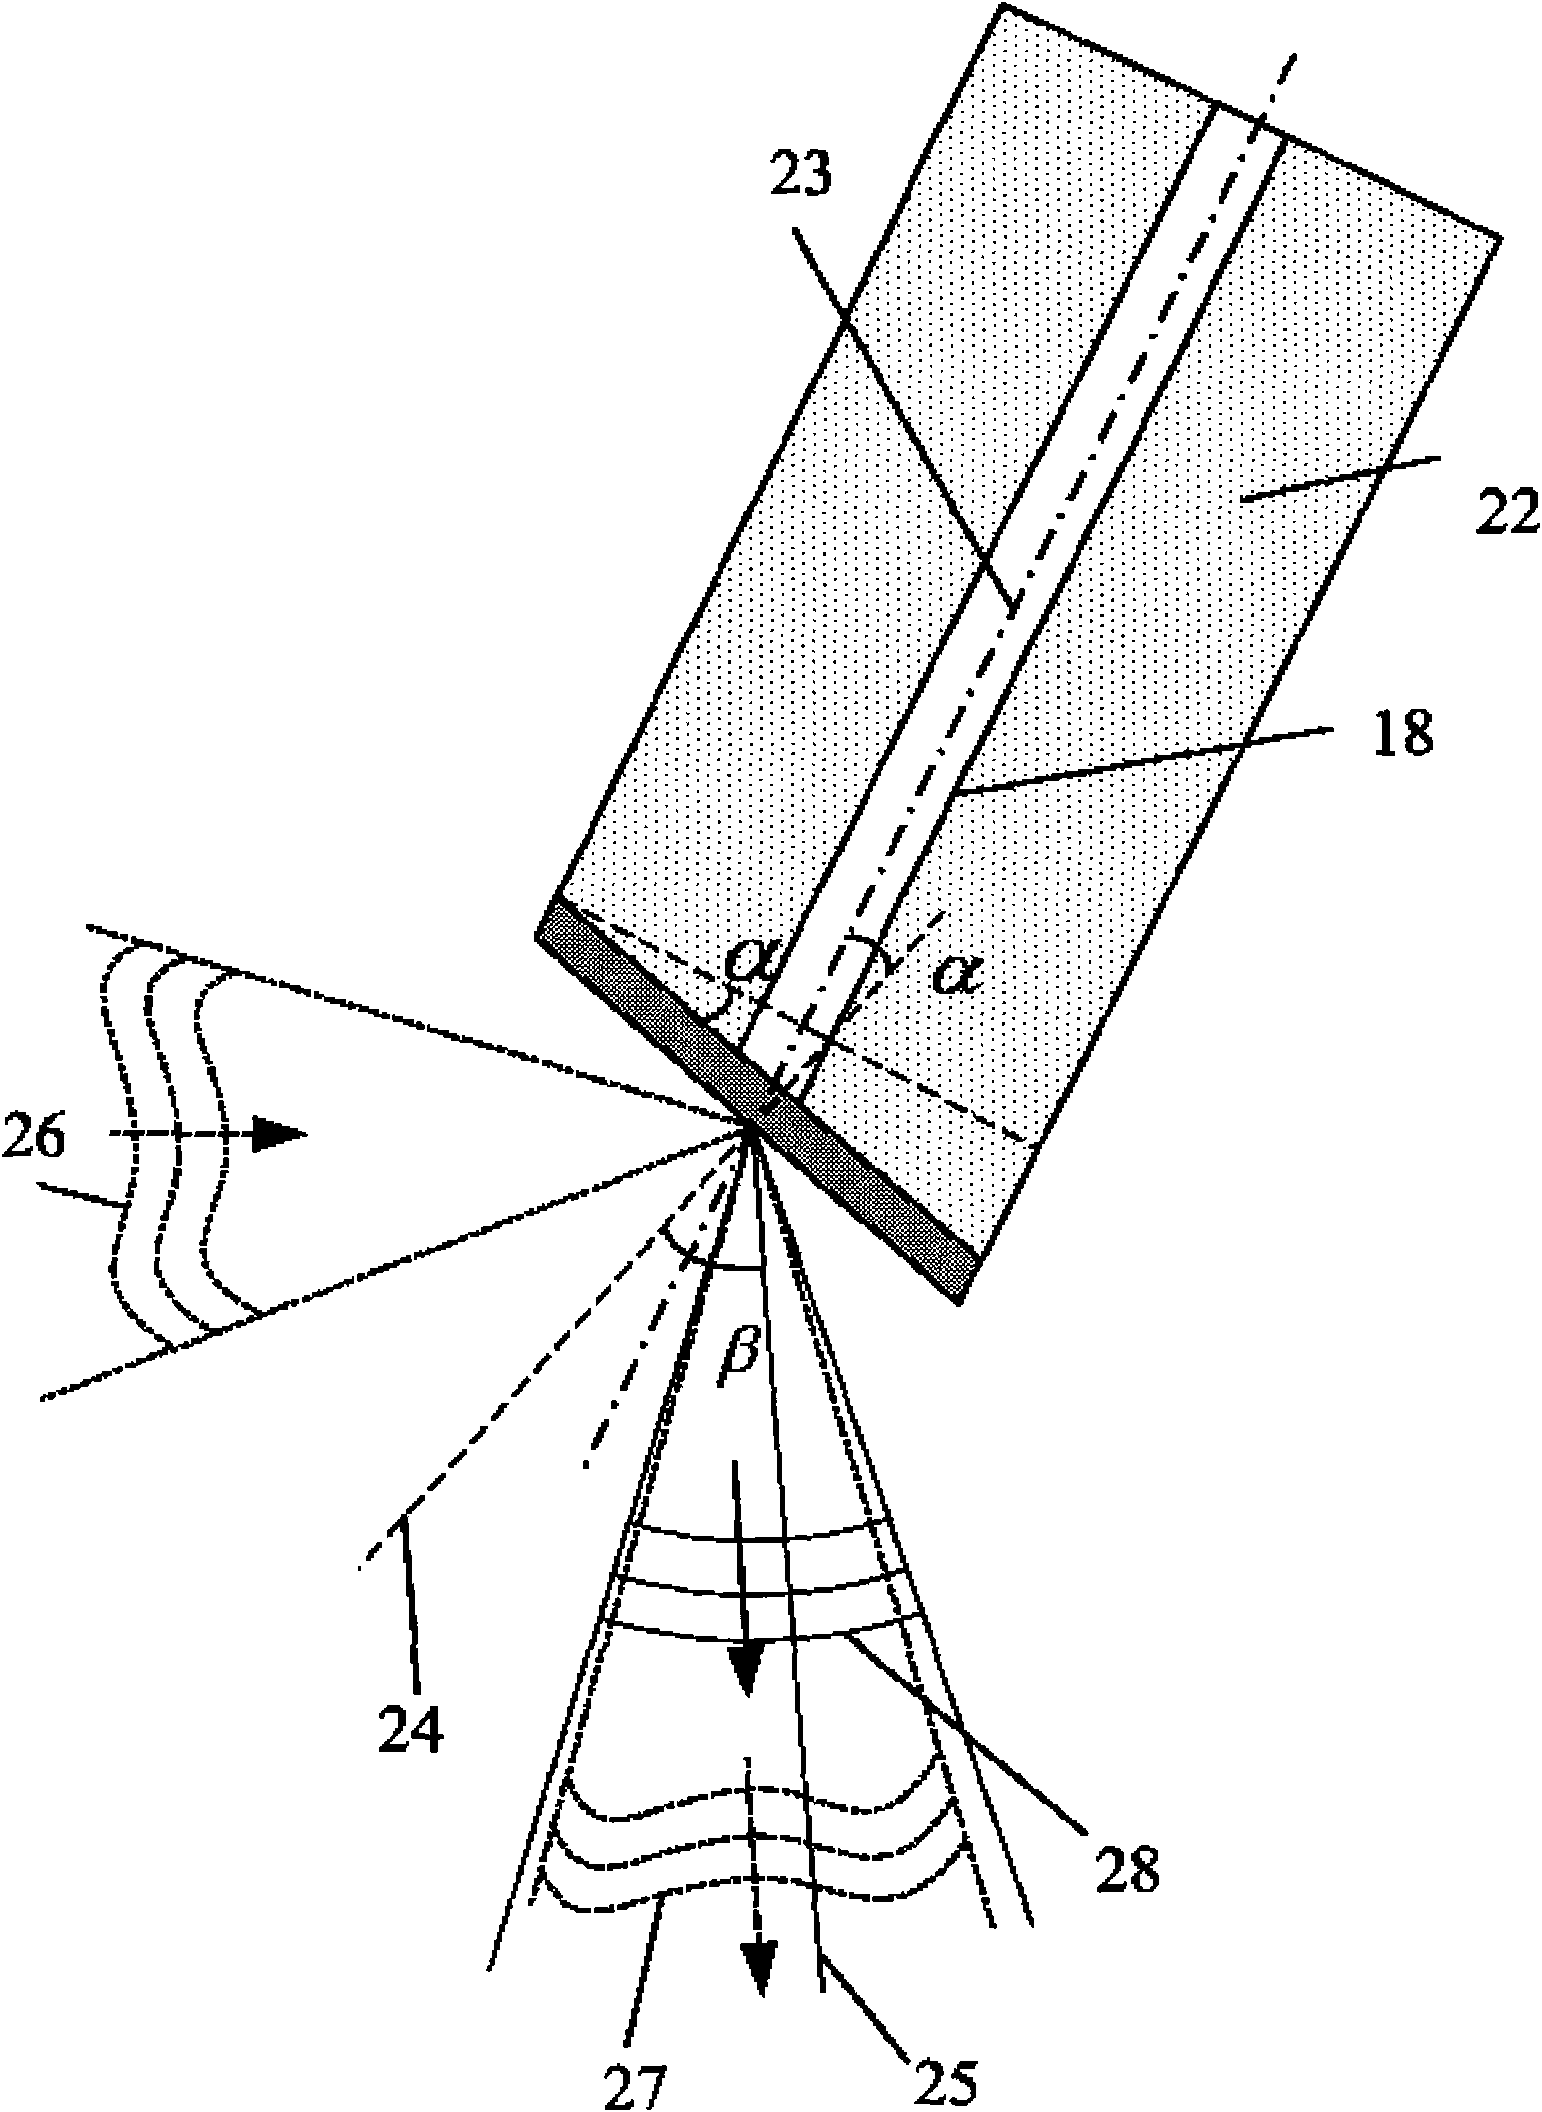 Plane surface shape measurement method of optical fiber point-diffraction phase-shifting interferometer